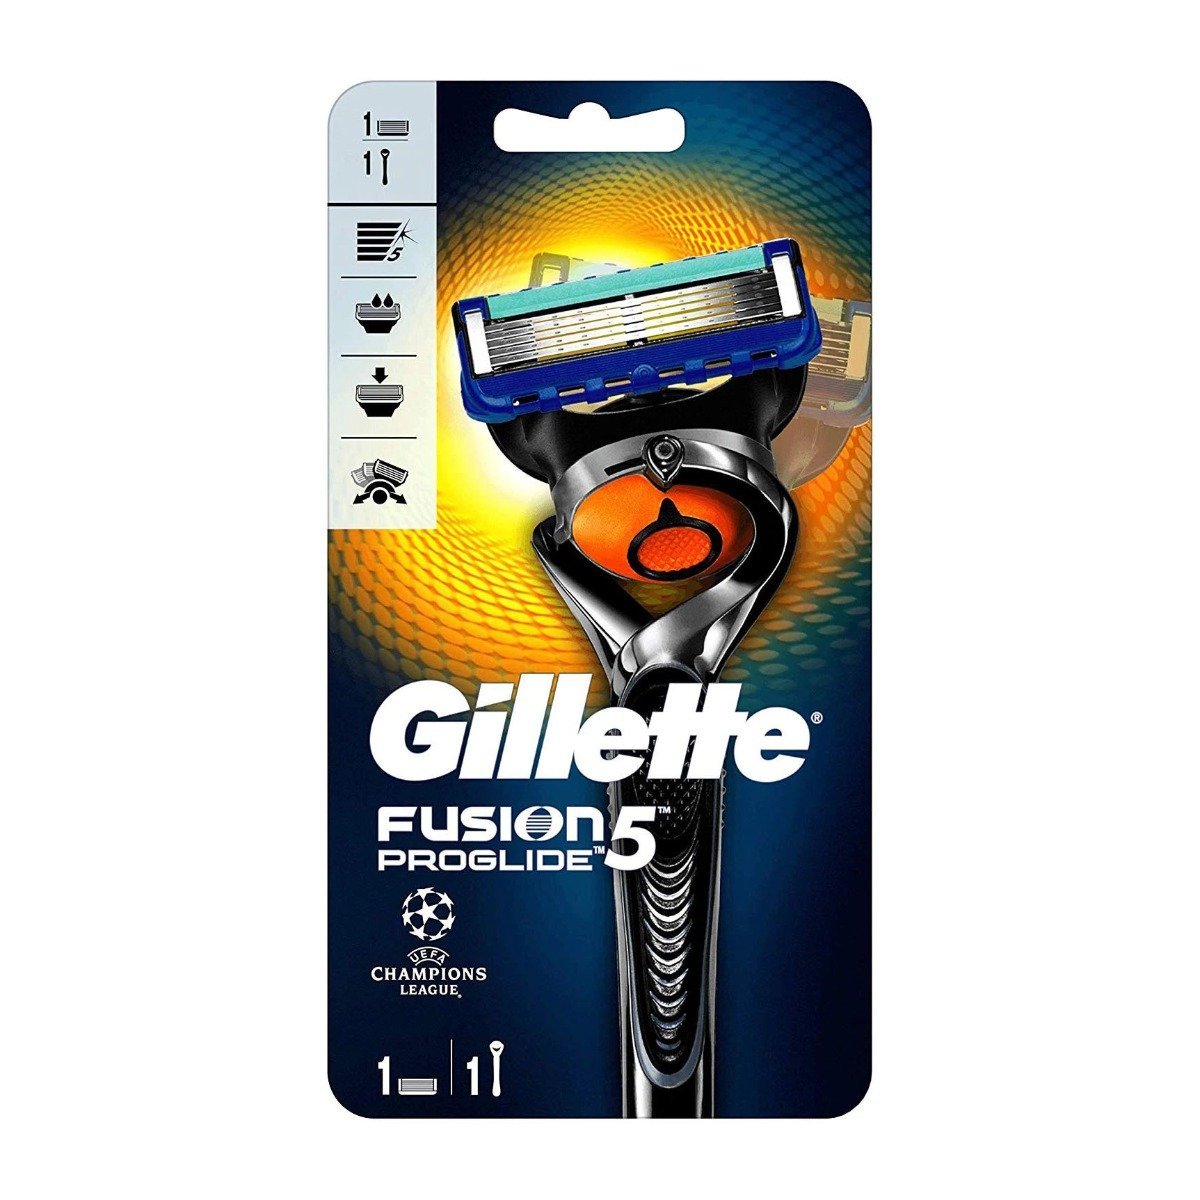 Gillette Fusion Proglide 5 Champions League - 1 Blade - Bloom Pharmacy